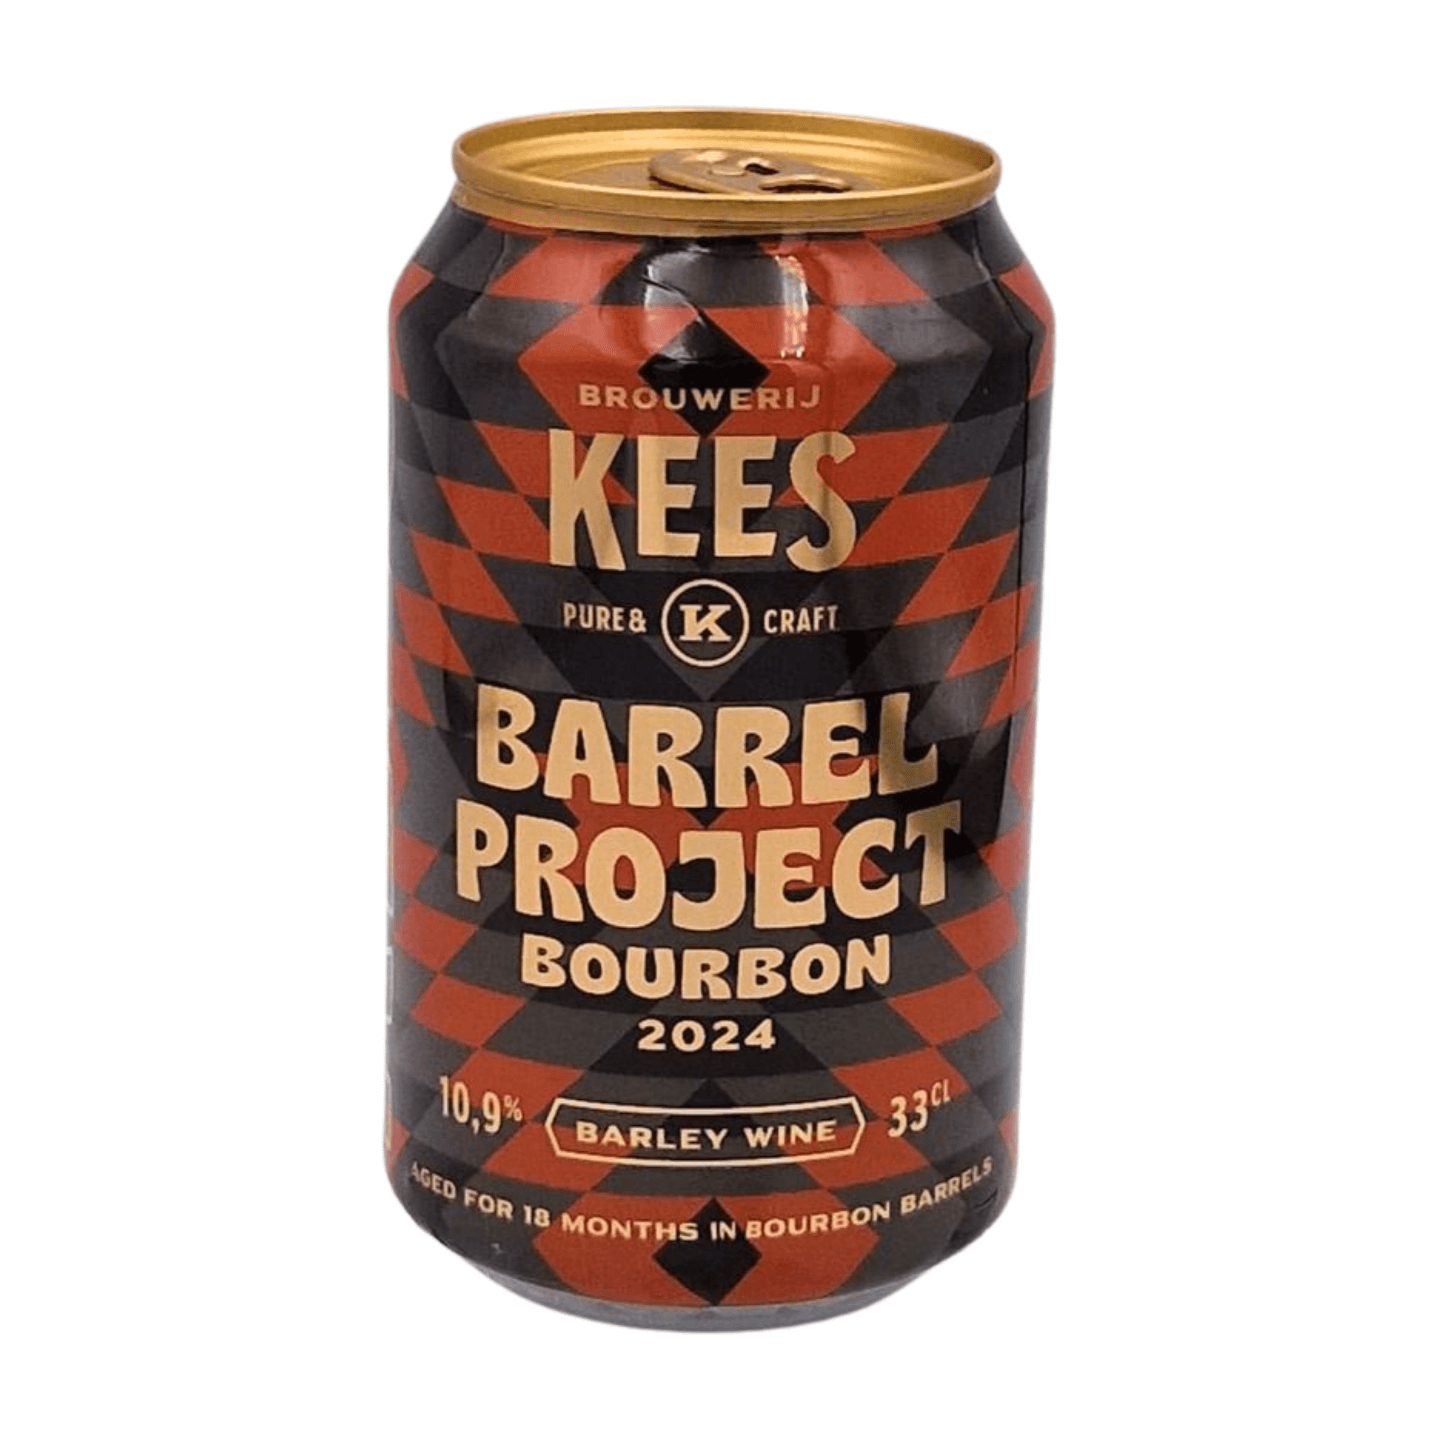 Kees Barrel Project Bourbon 2024 Barley Wine